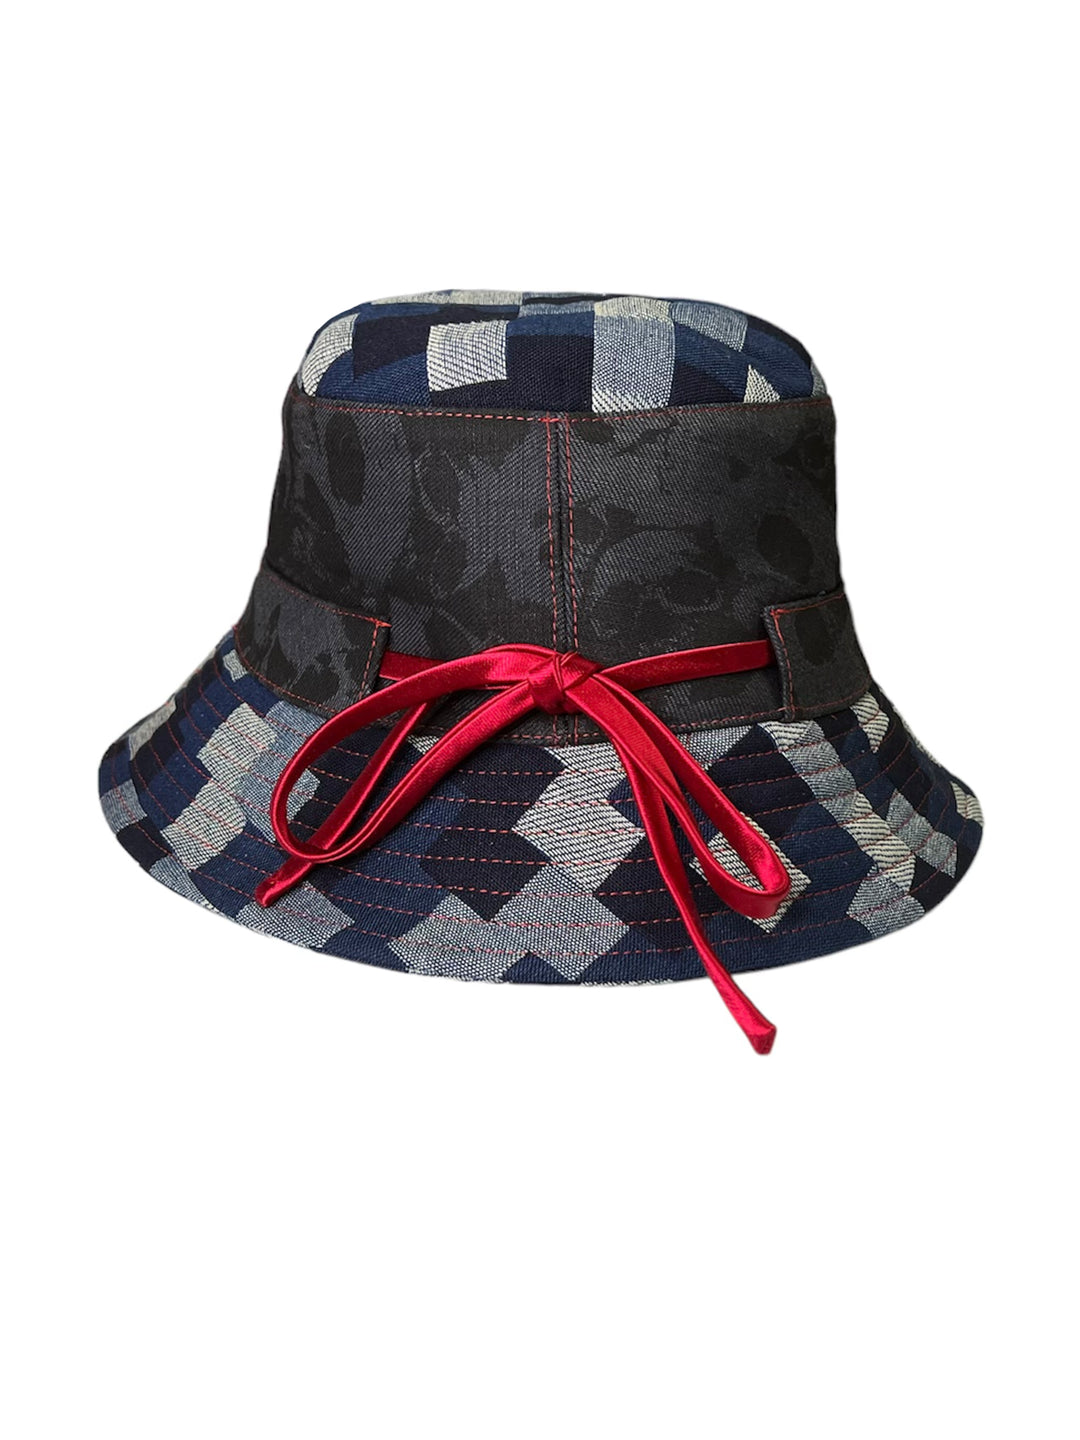 Denim bucket hat with red satin drawstring